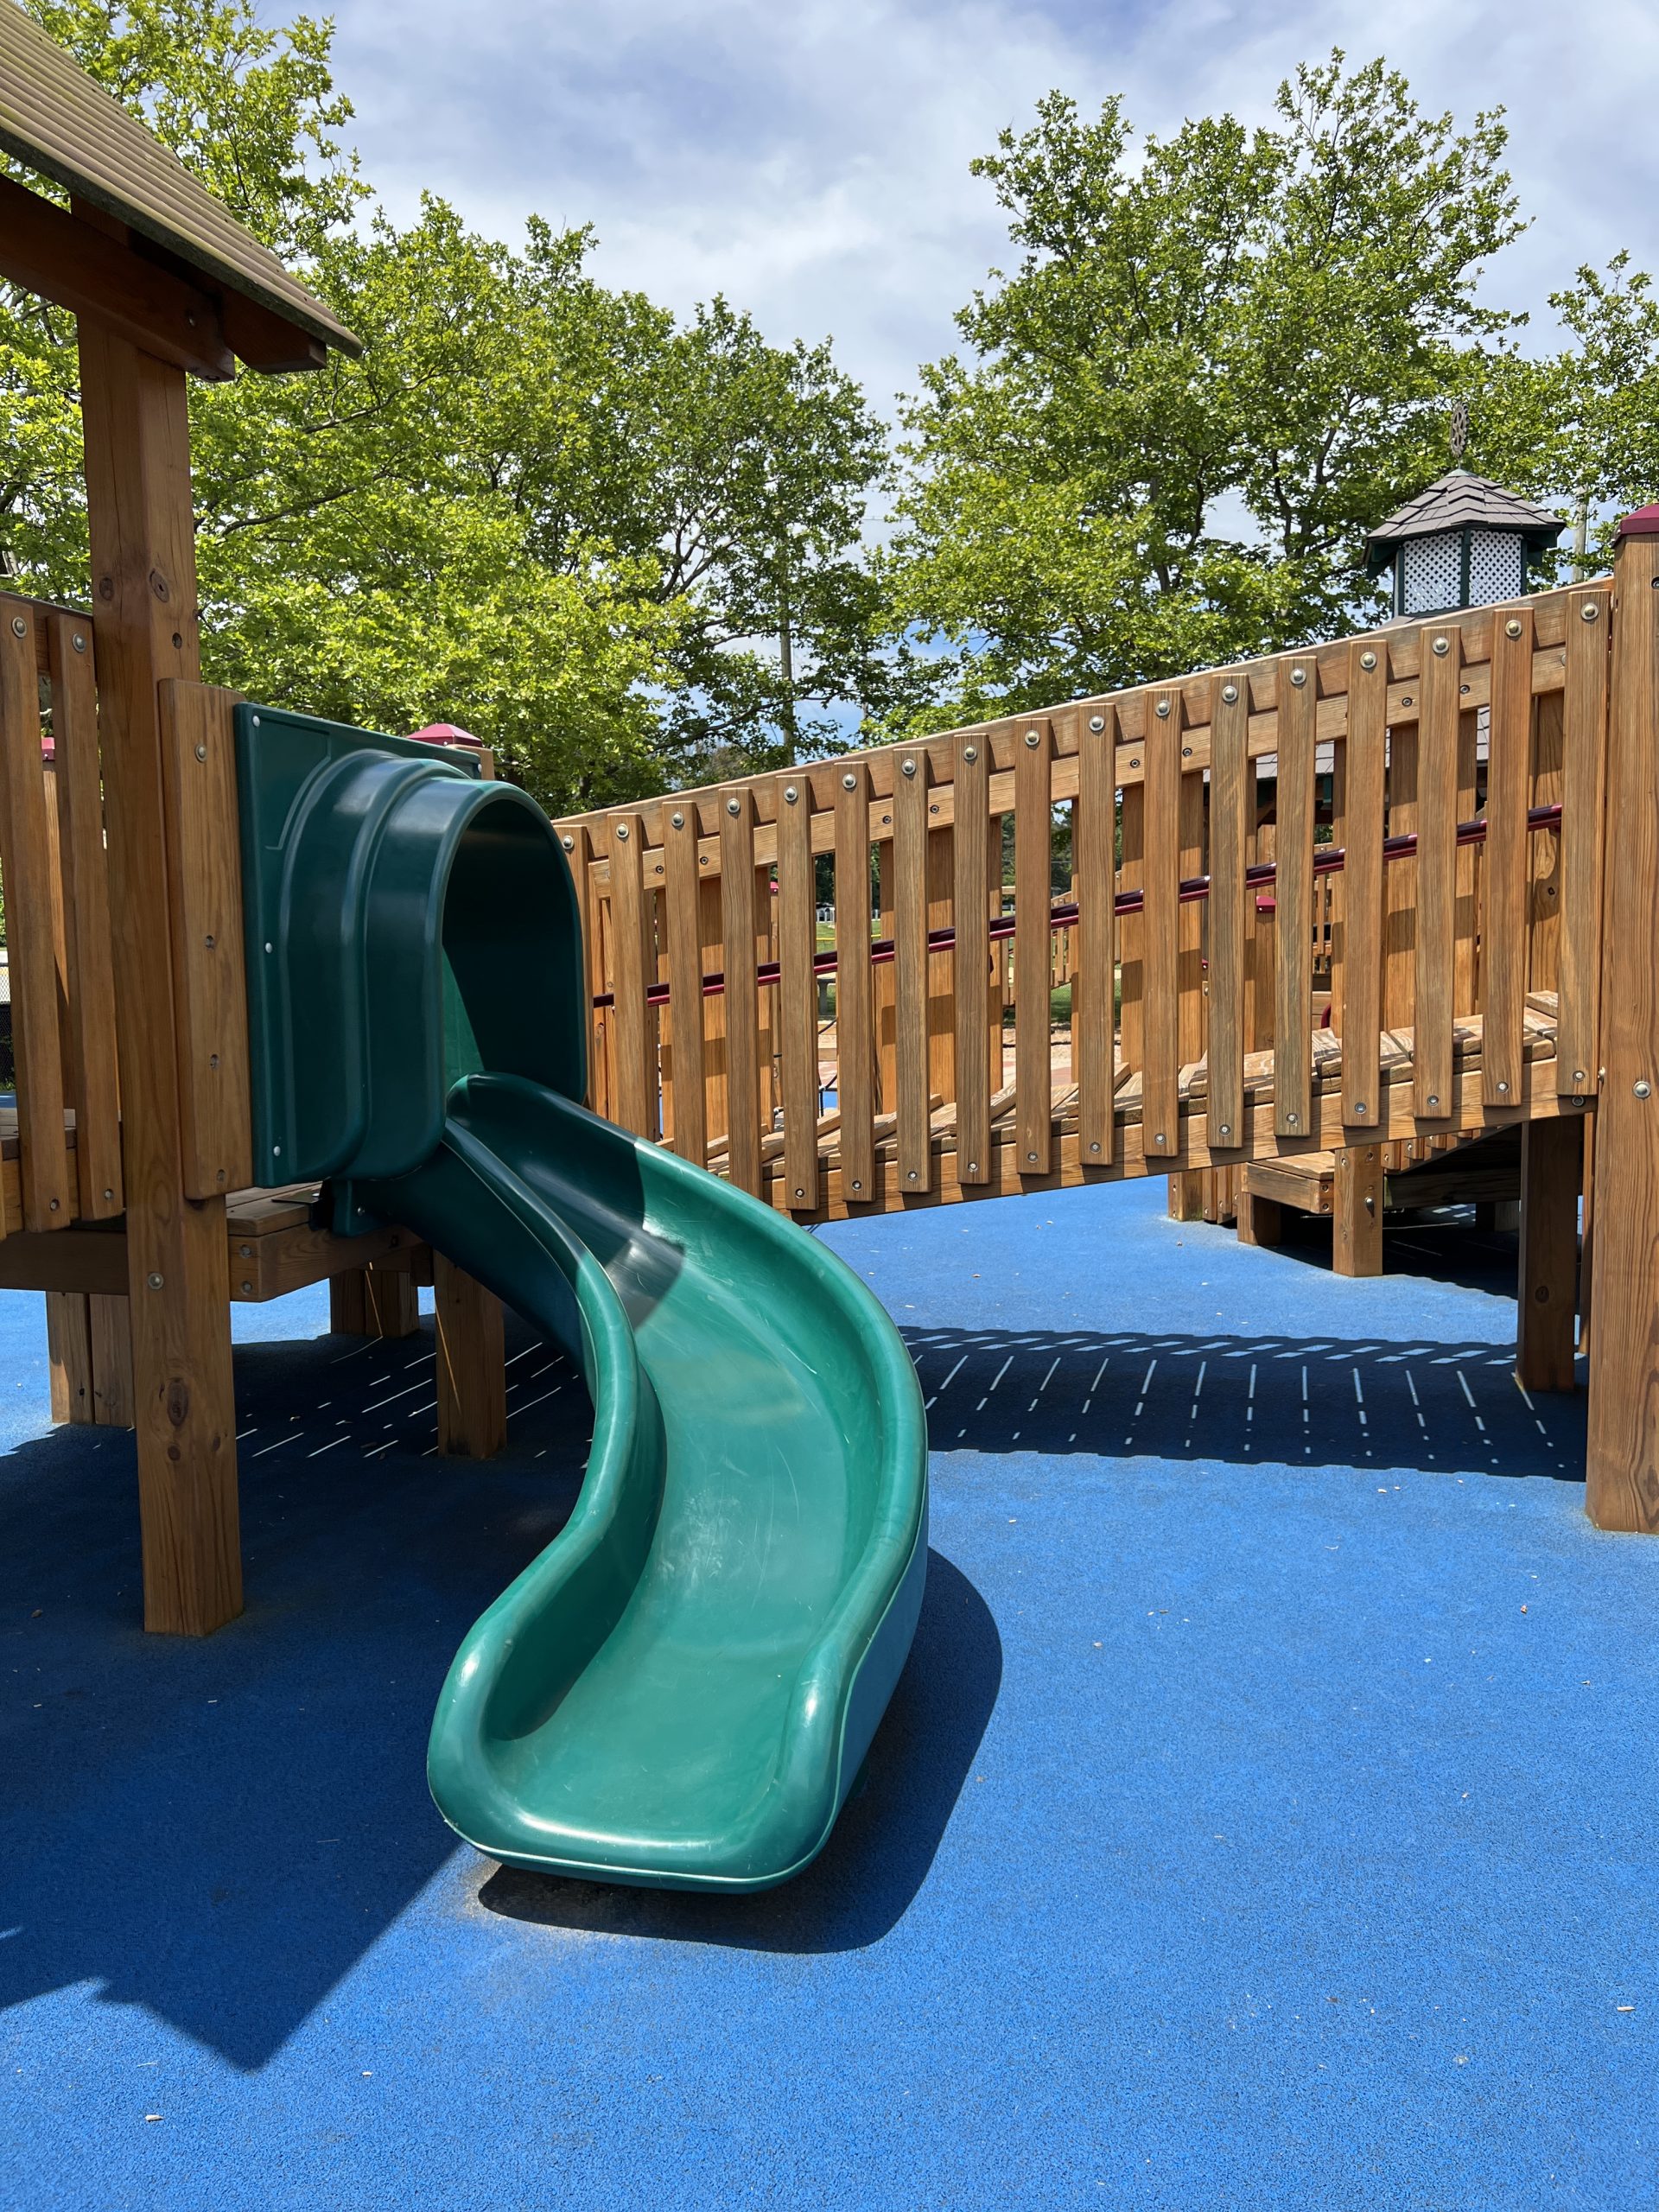 Gardner Field Playground in Denville NJ curvy slide